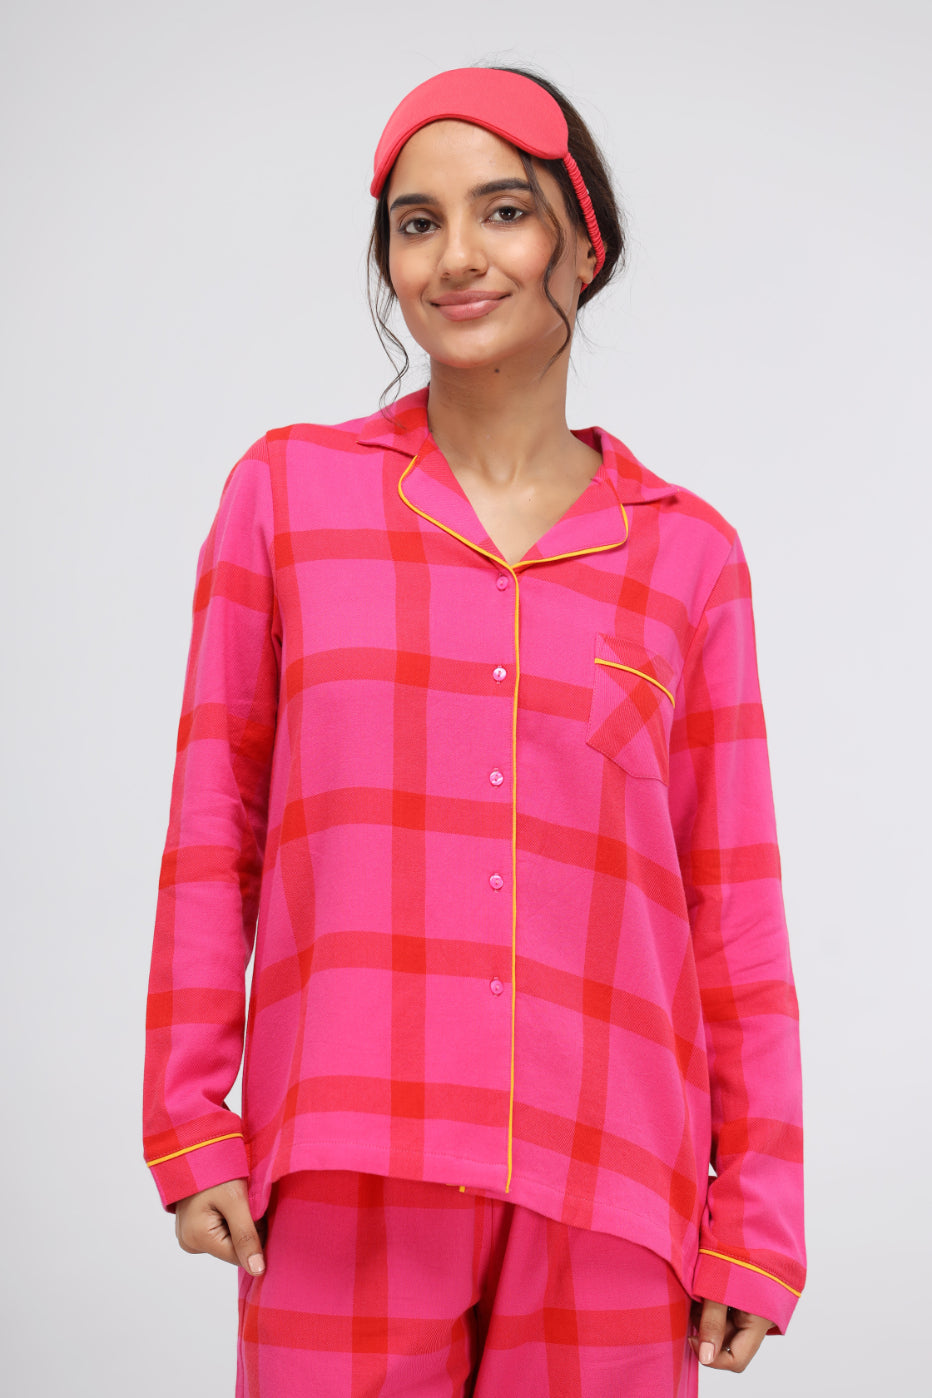 Women's Pajama set, Nightsuit, Women's clothing, Indian, Best nightwear,  loungewear – NeceSera